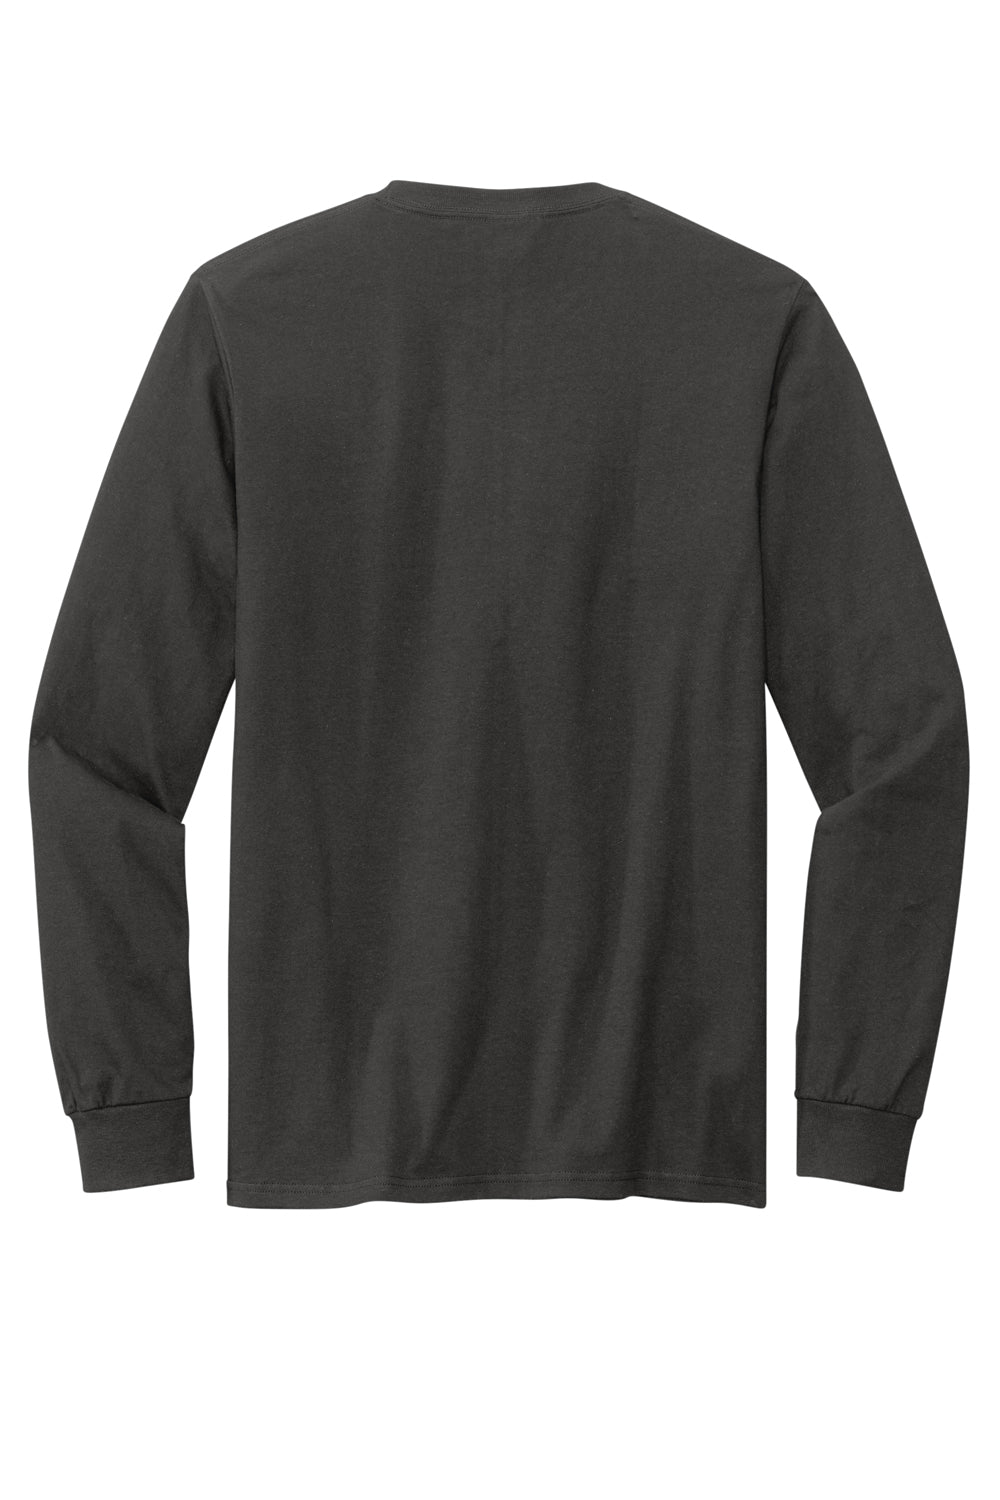 Volunteer Knitwear VL60LS Chore Long Sleeve Crewneck T-Shirt Steel Grey Flat Back